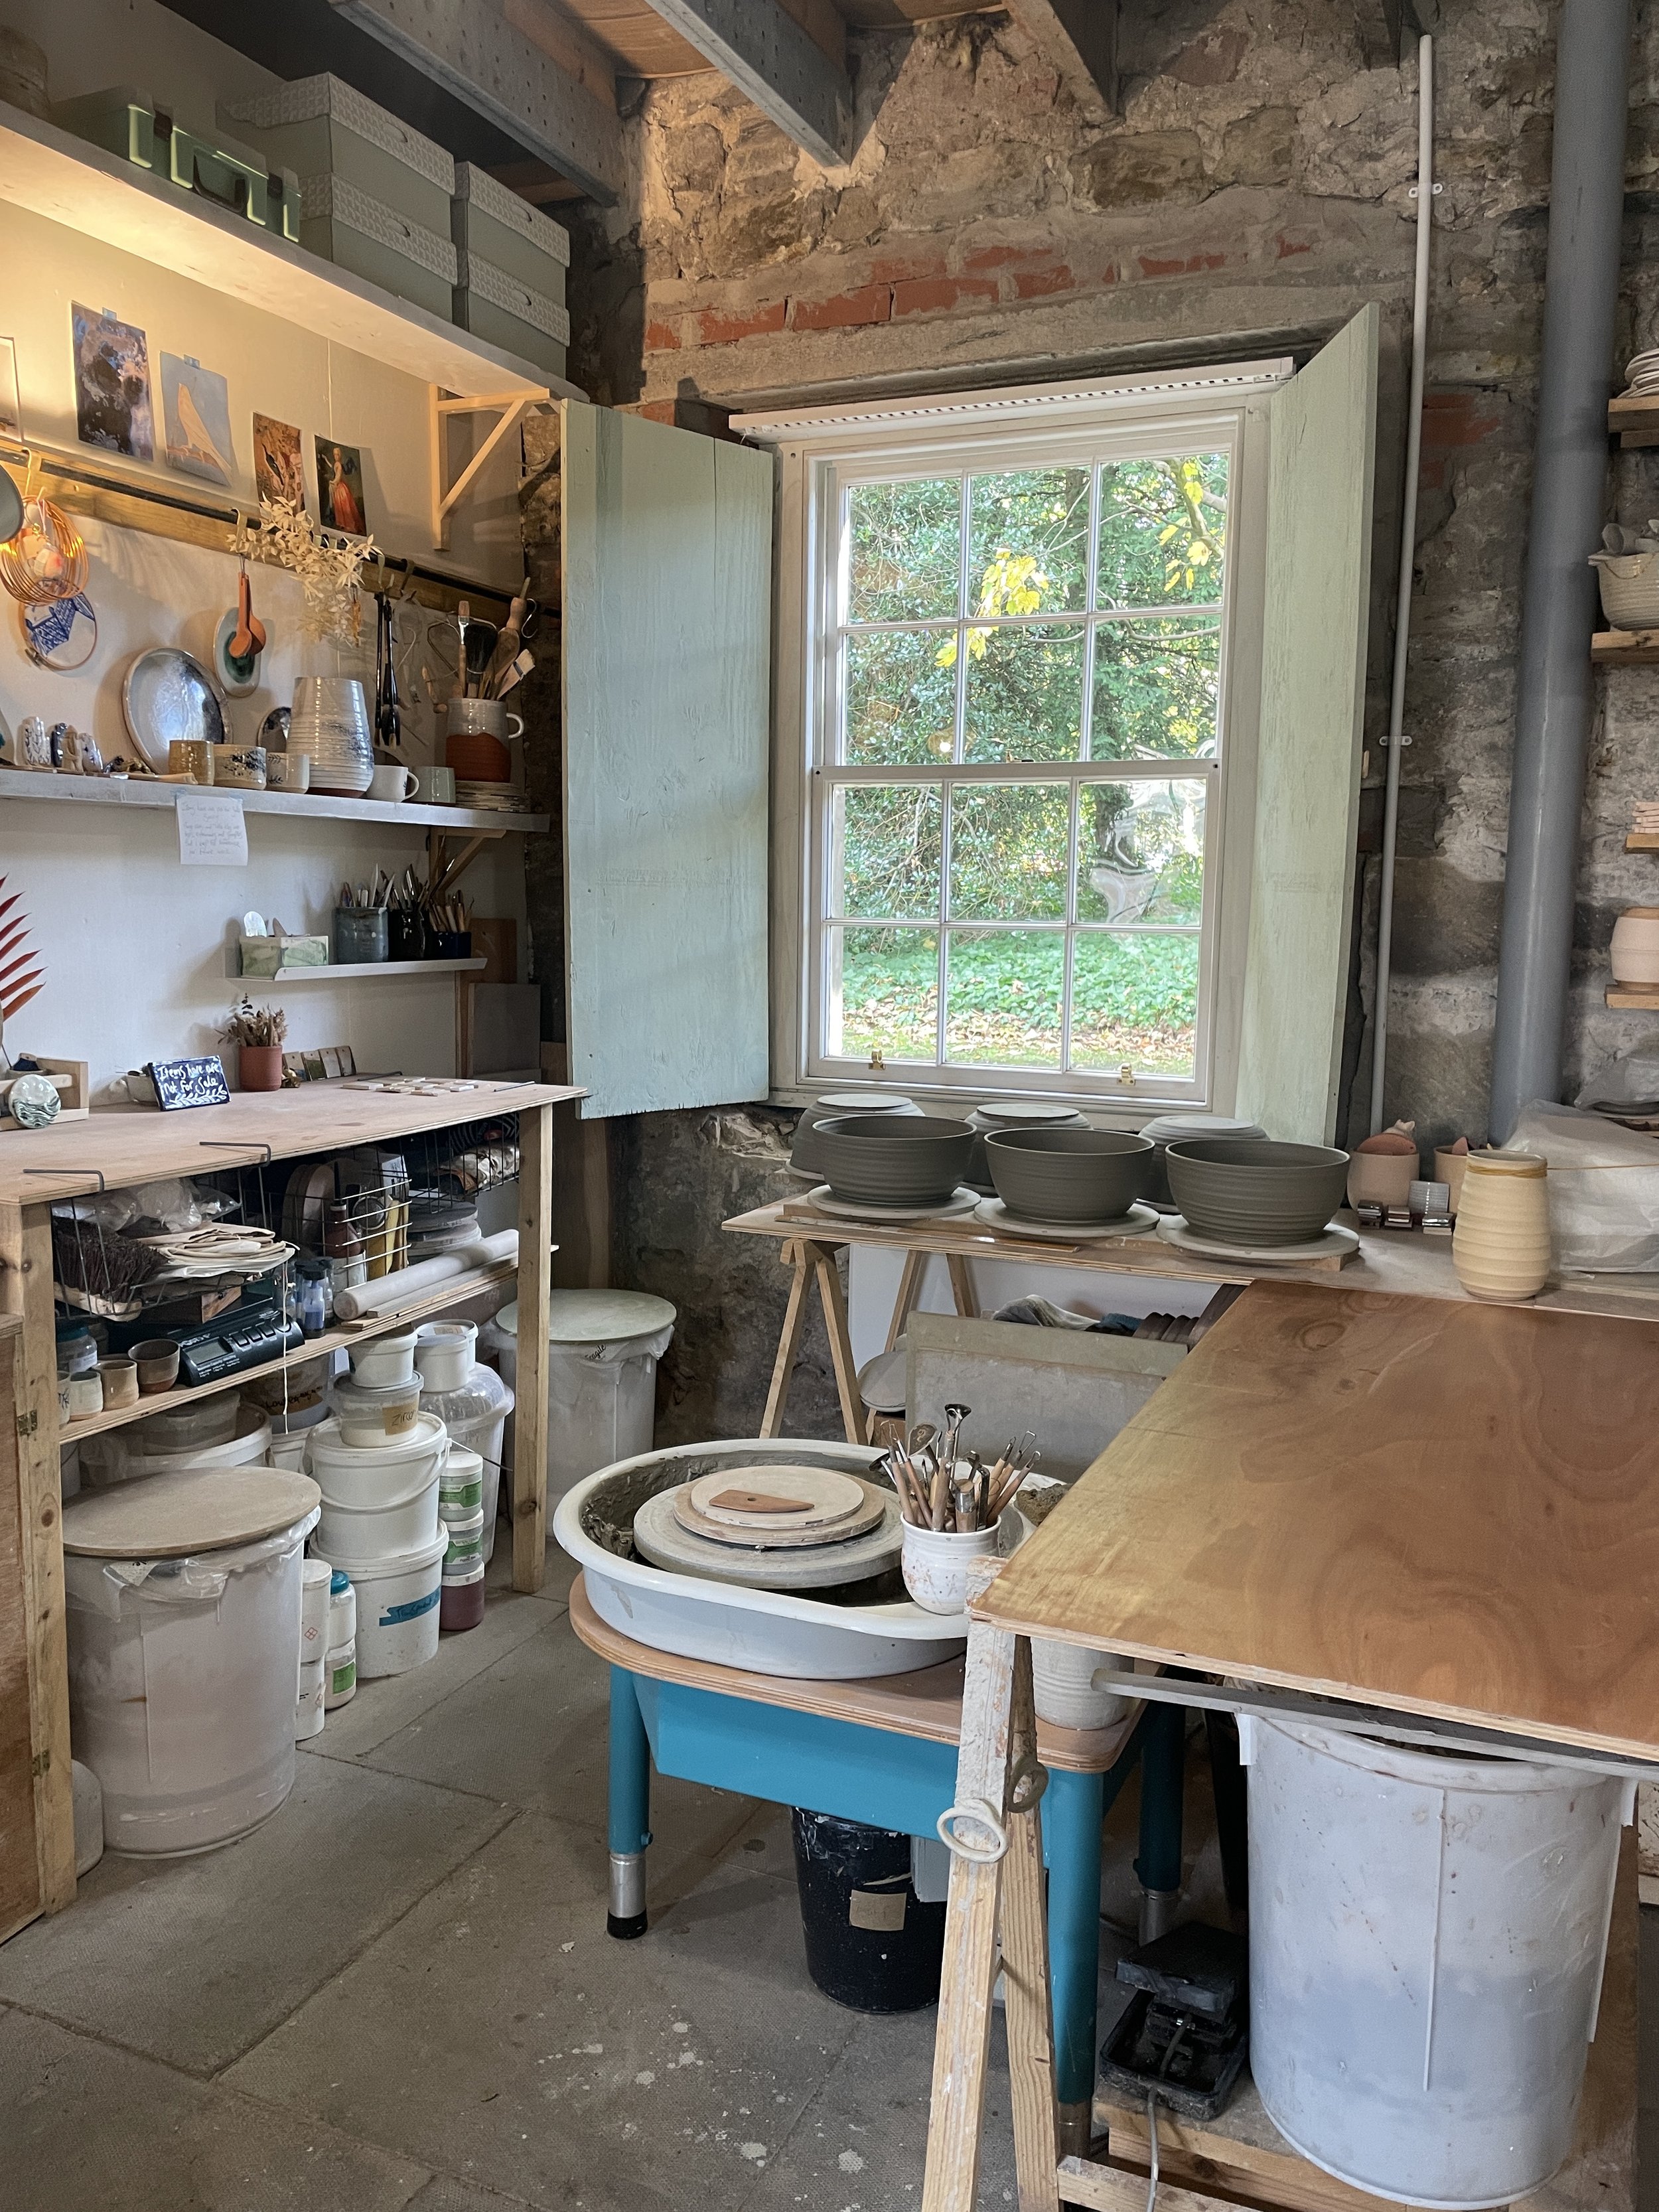 Pottery studio workbench